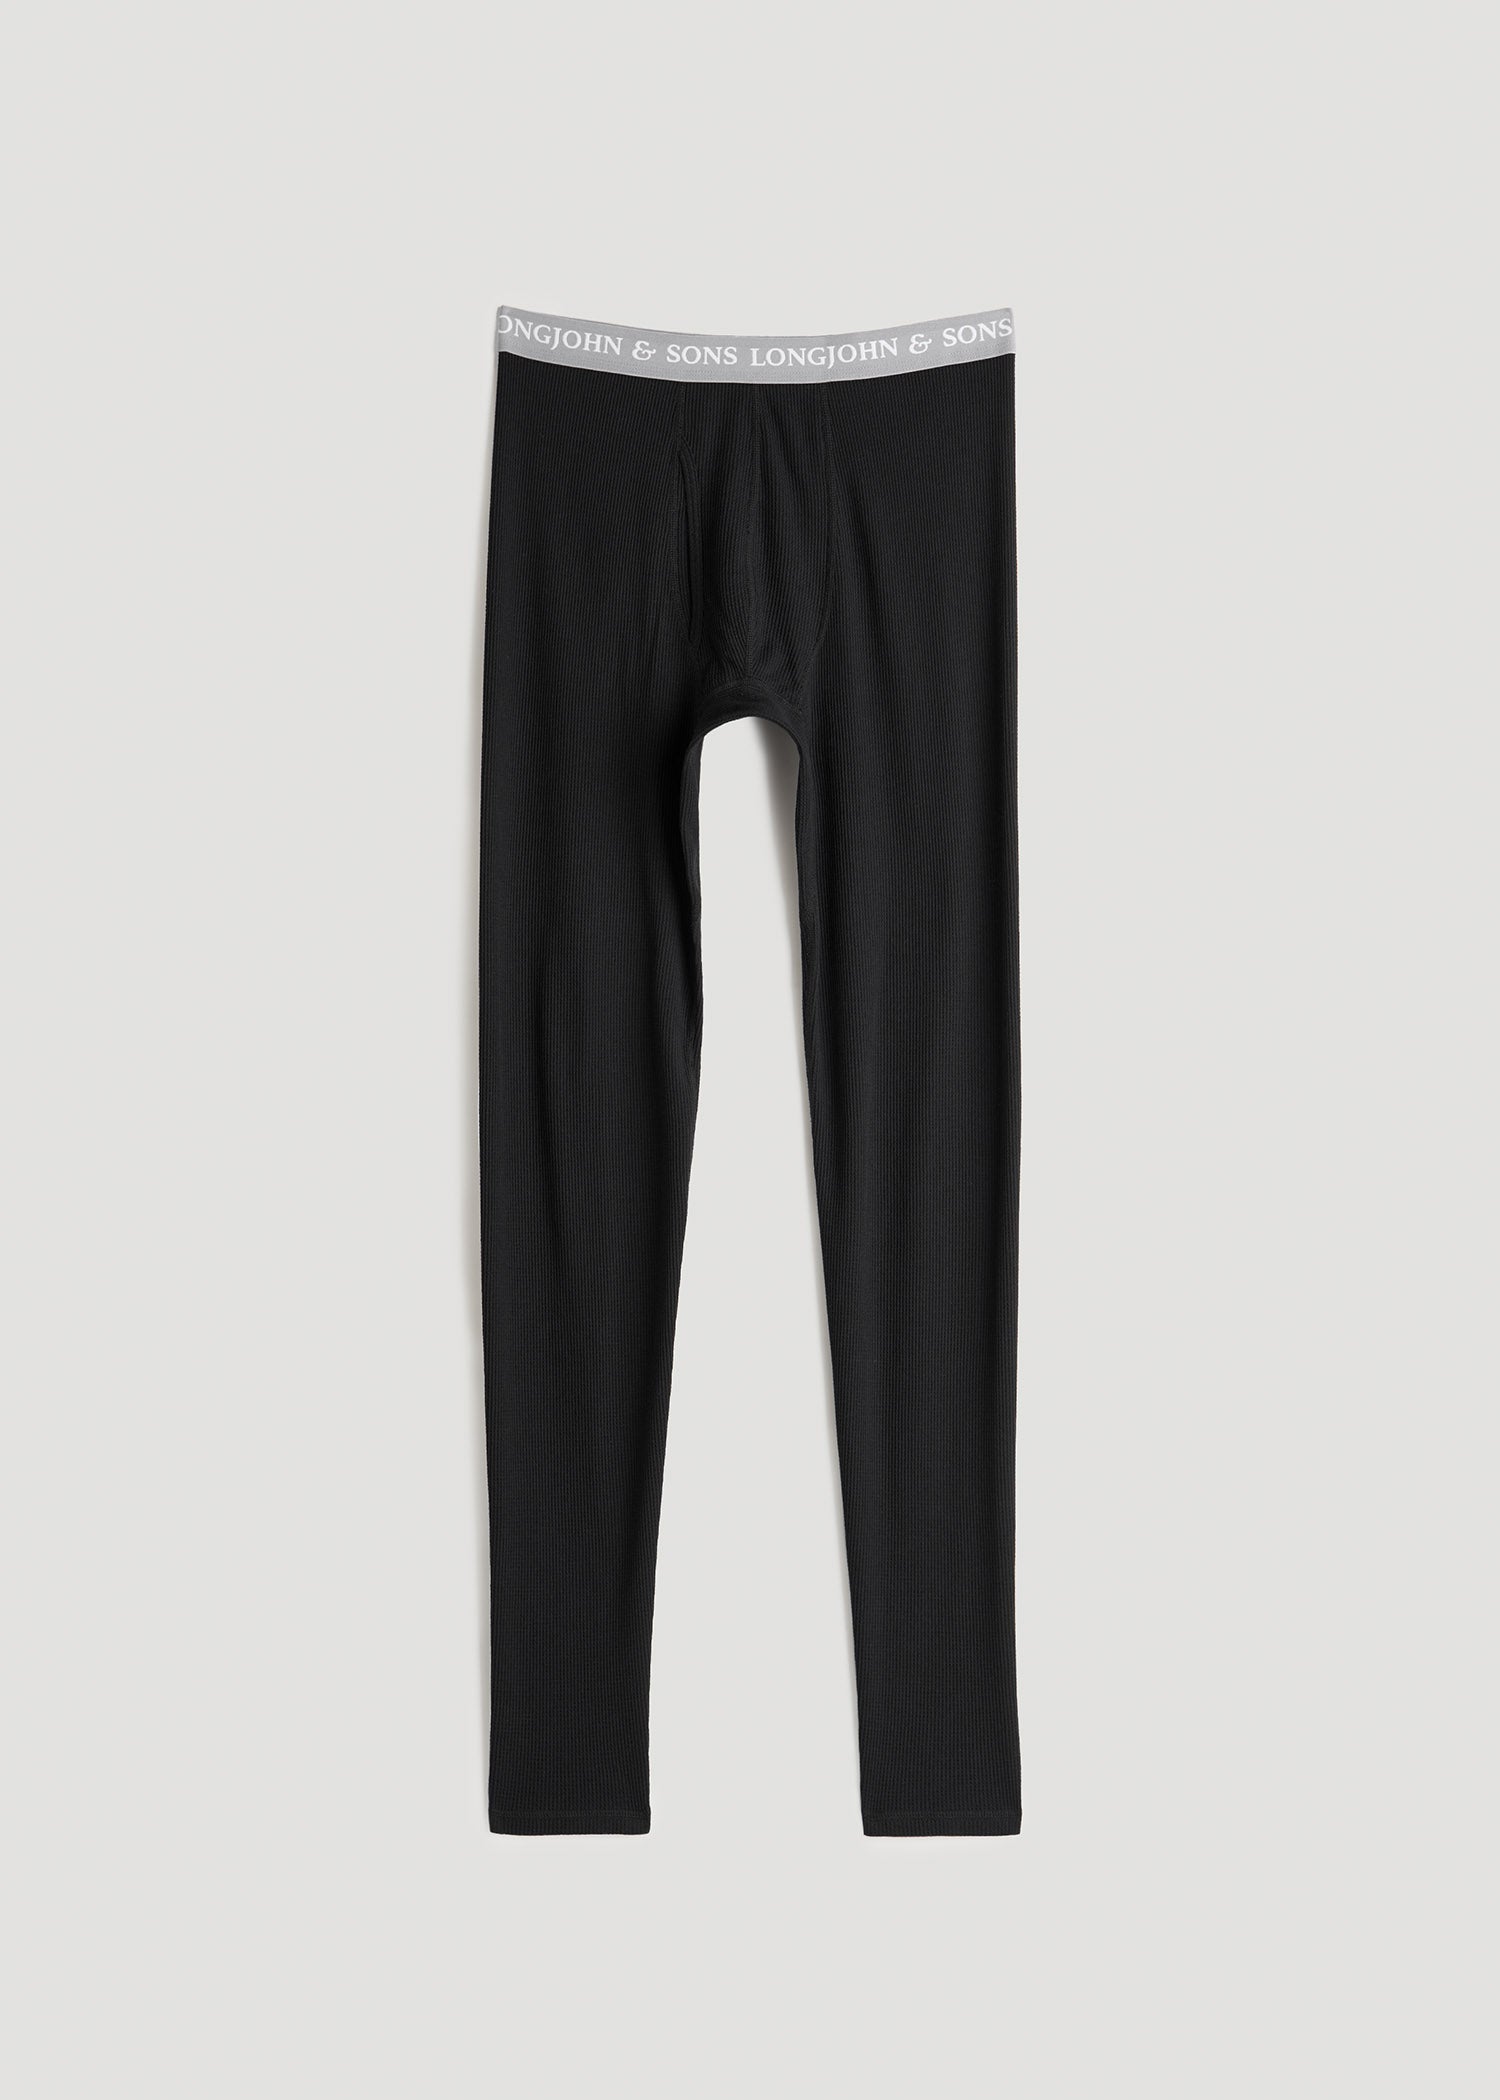 LJ&S Long Thermal Underwear in Black - Bottoms for Tall Men